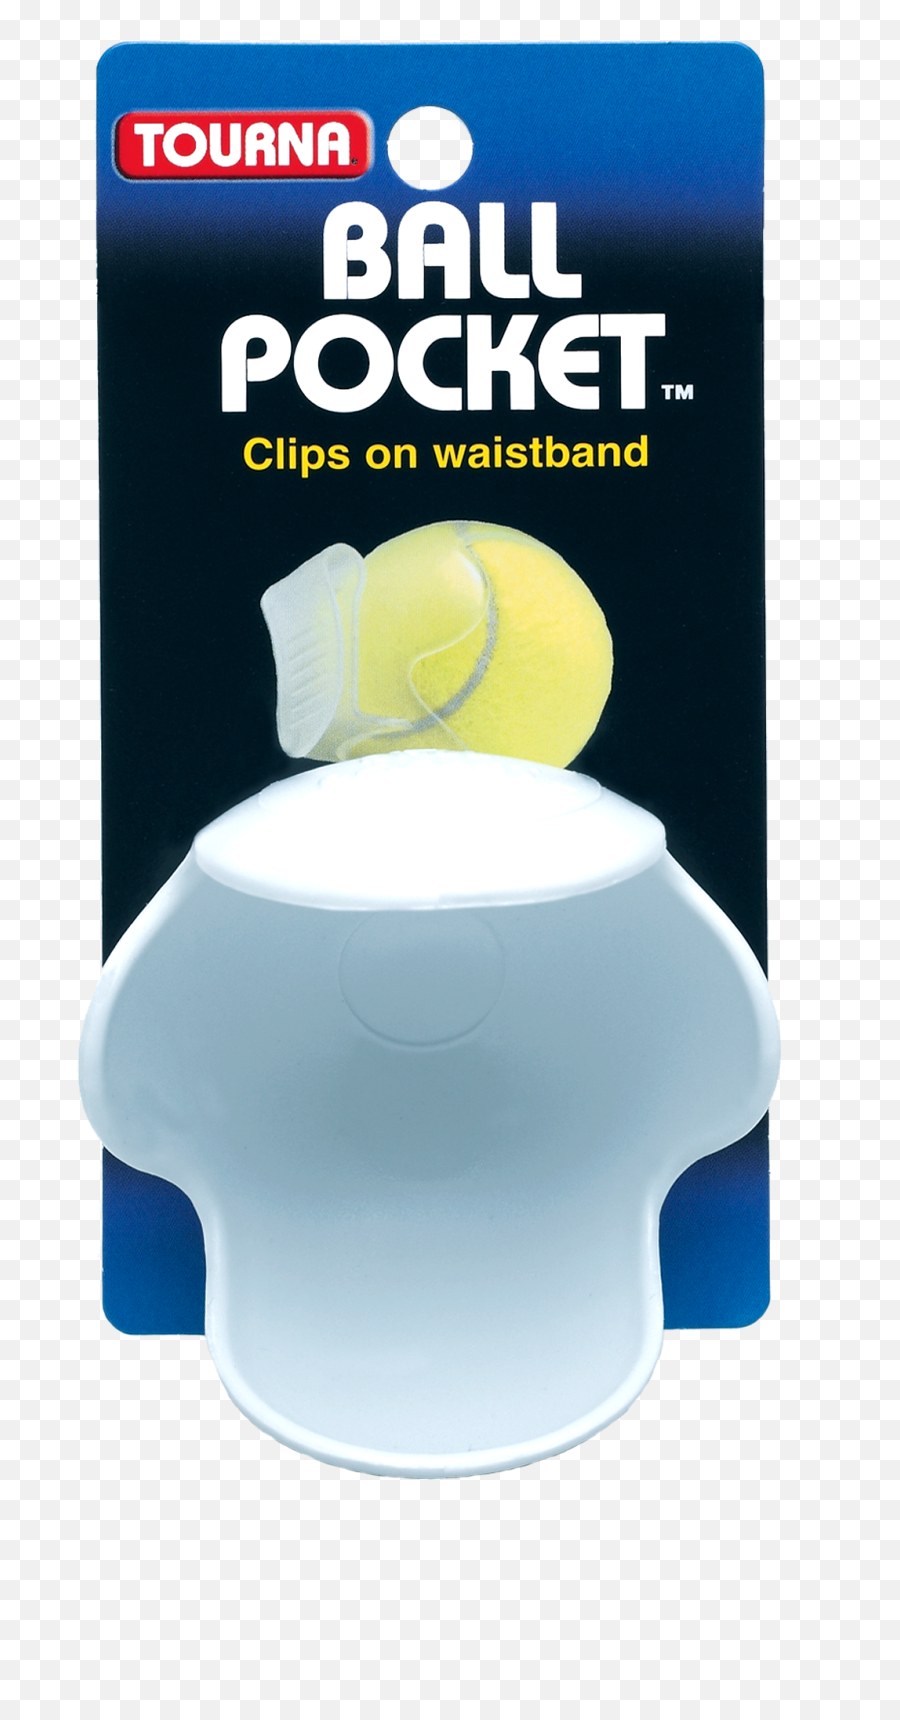 Tourna Tennis Ball Pocket White - Tennis Ball Png,Tennis Balls Png